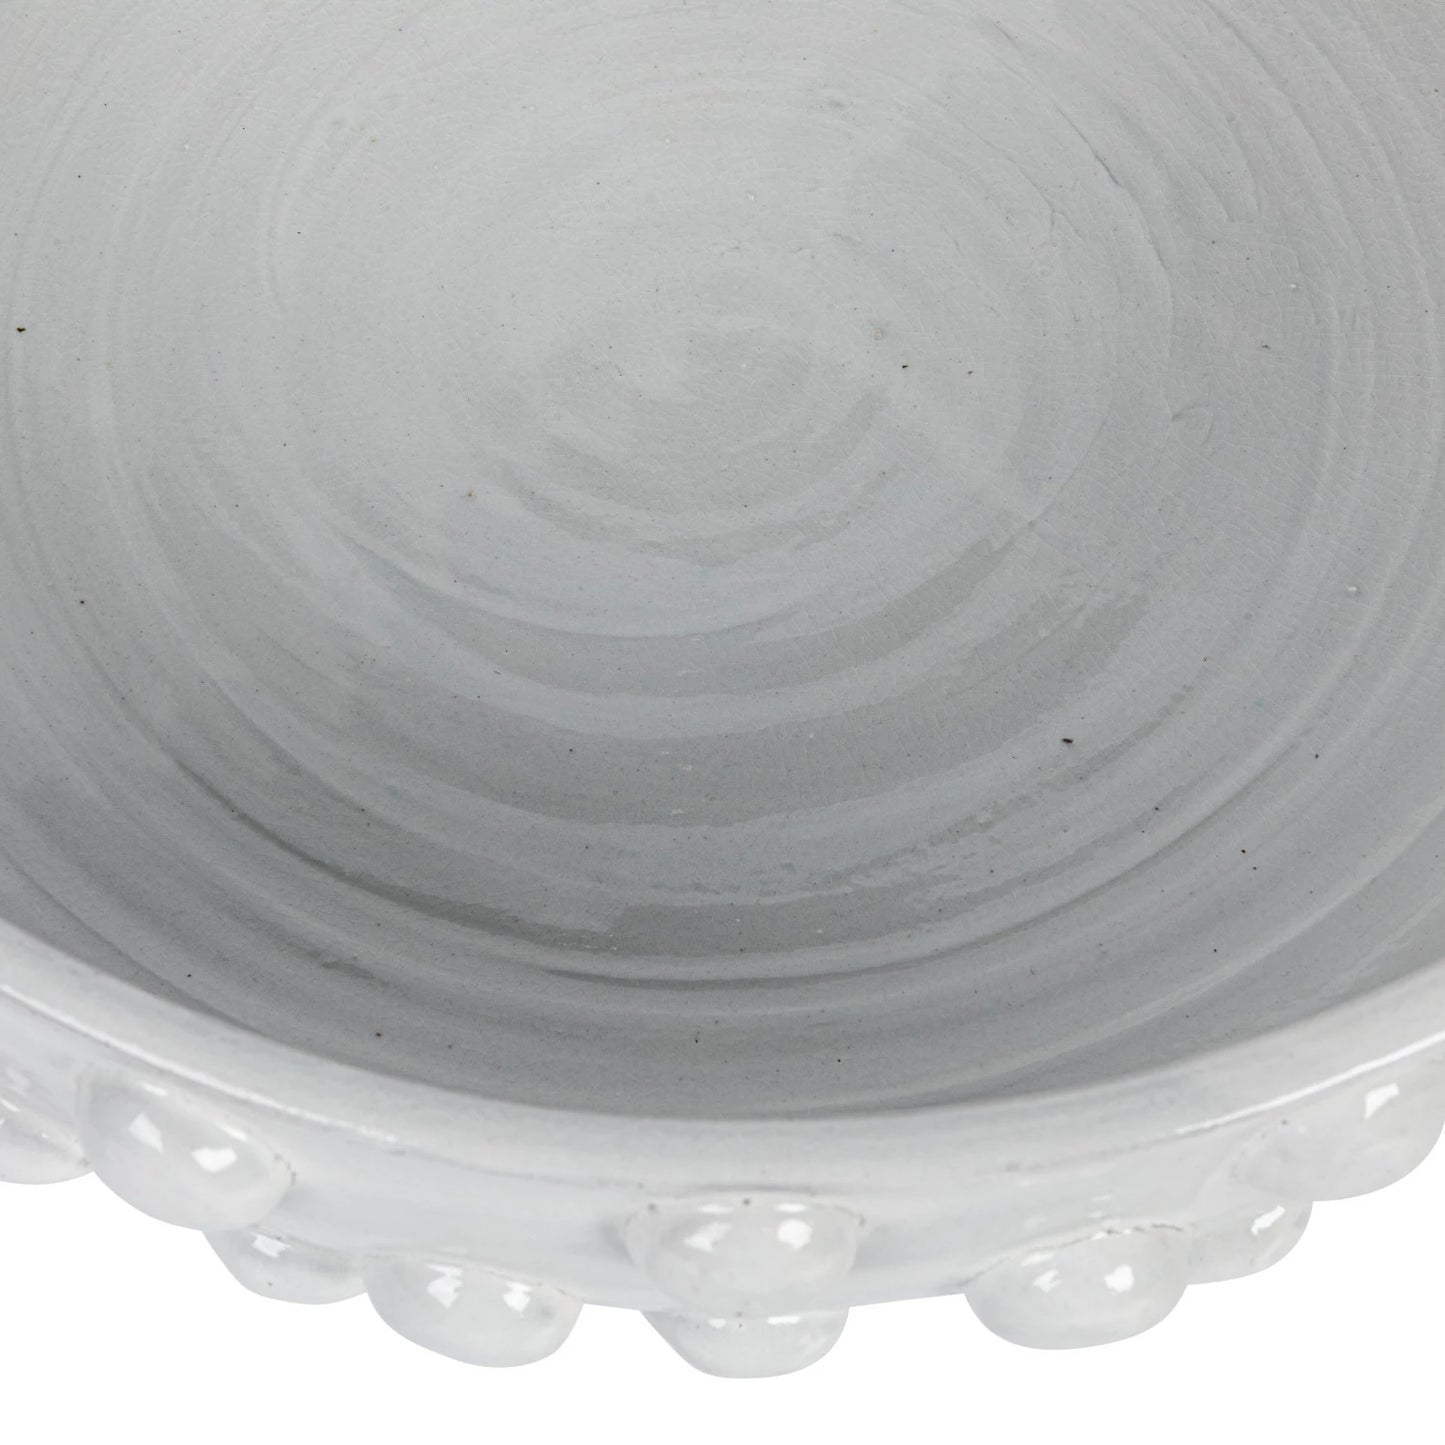 Decorative Terra-cotta Bowl w/ Raised Dots, White